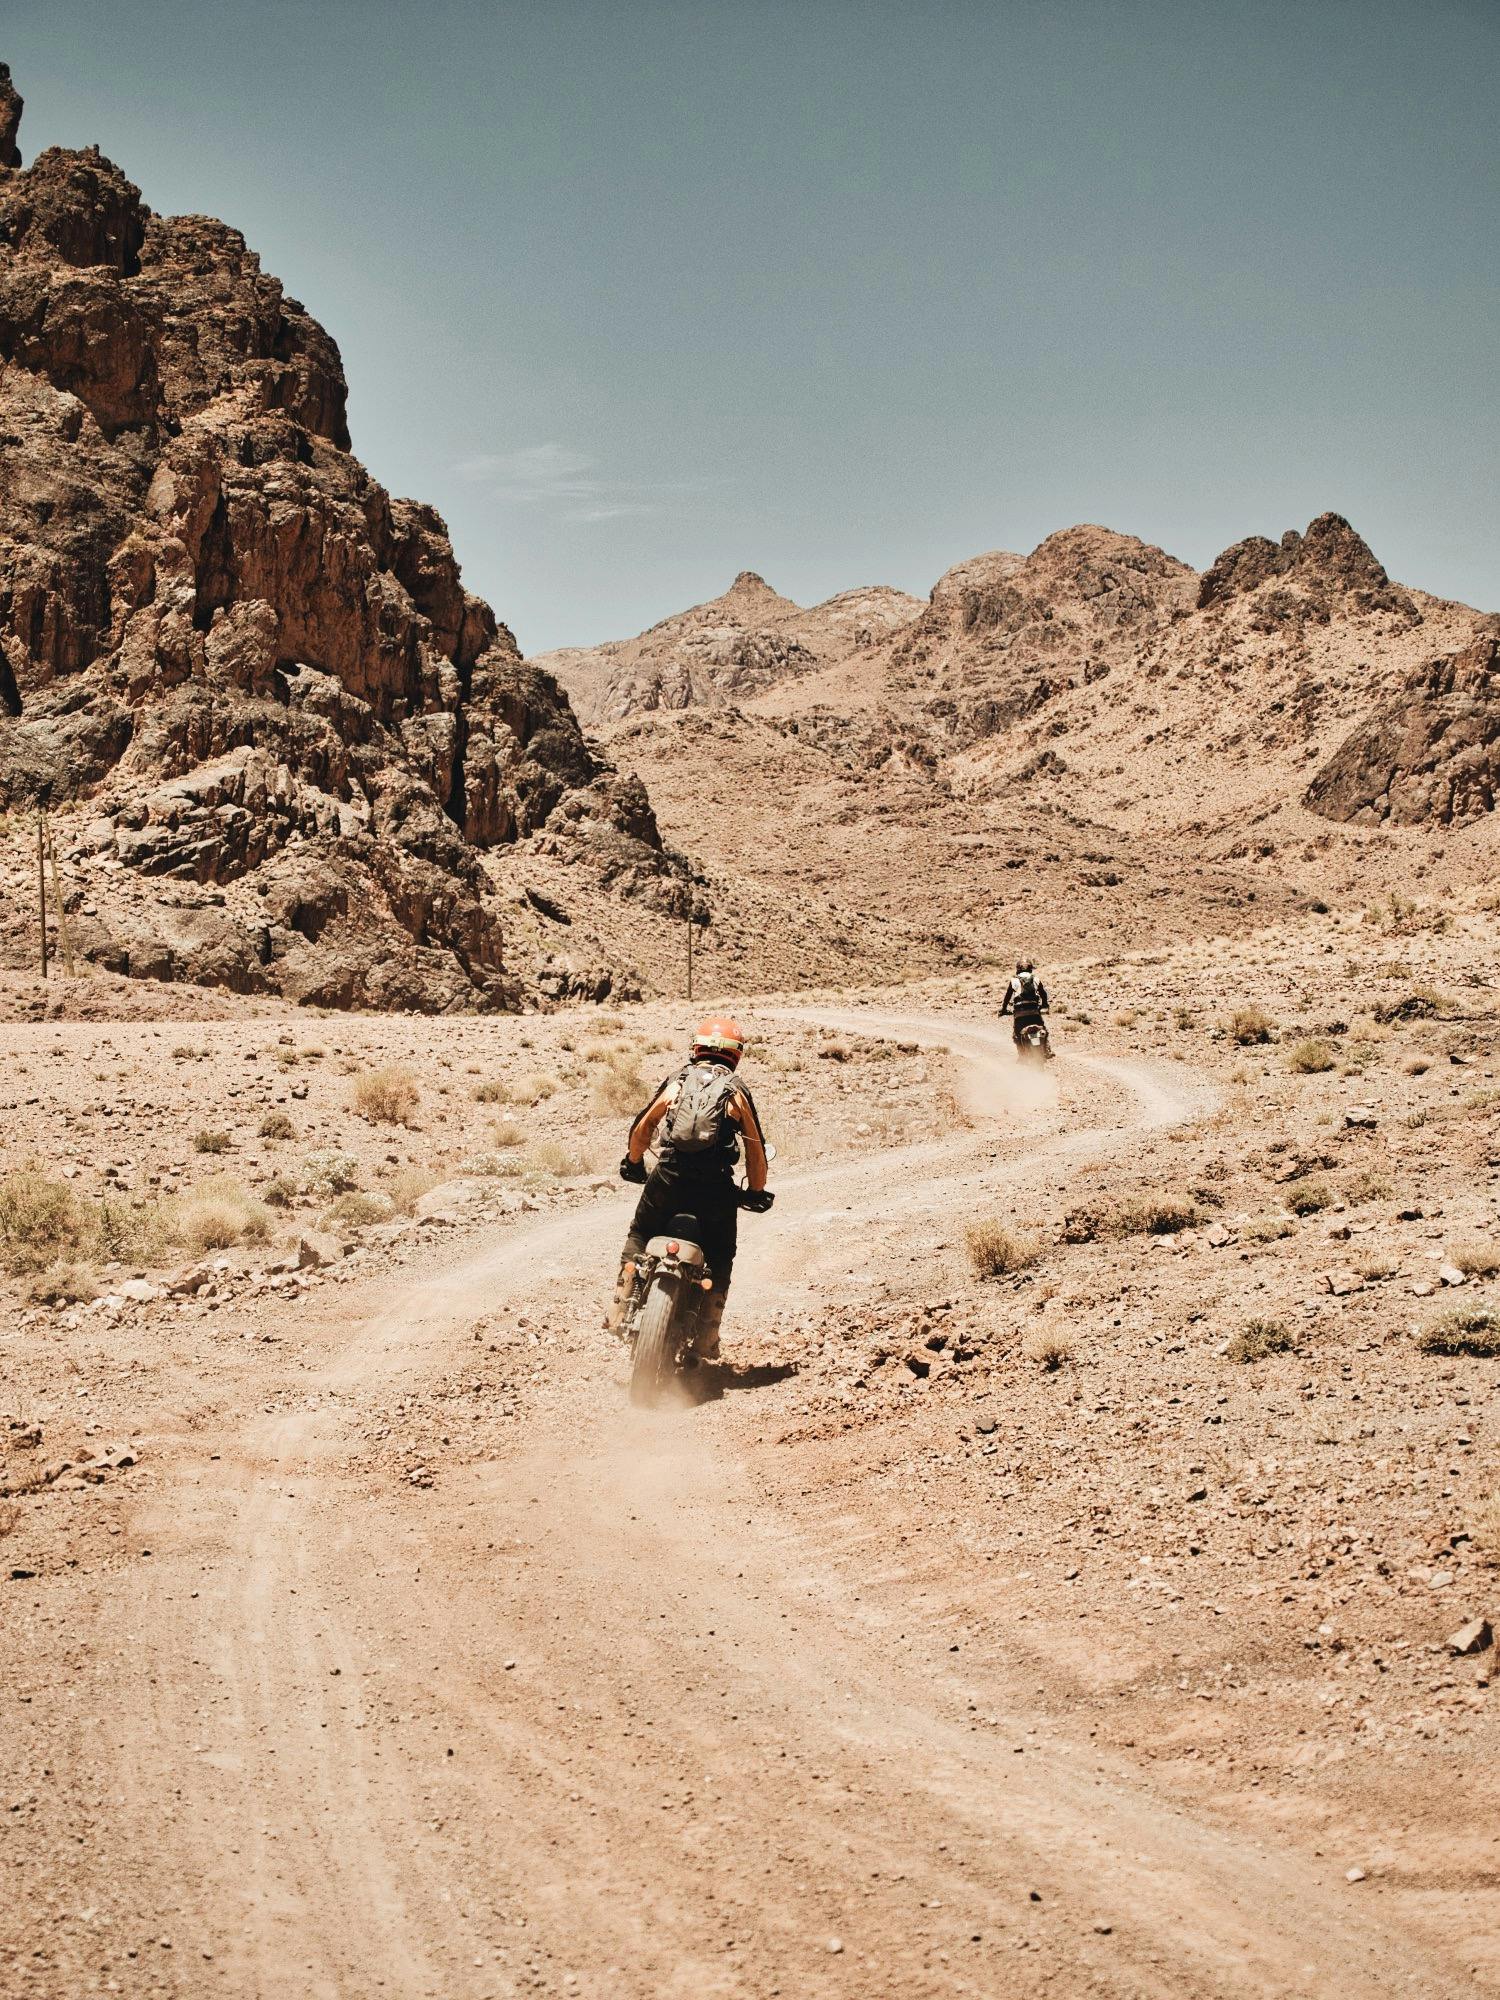 Motos in the desert